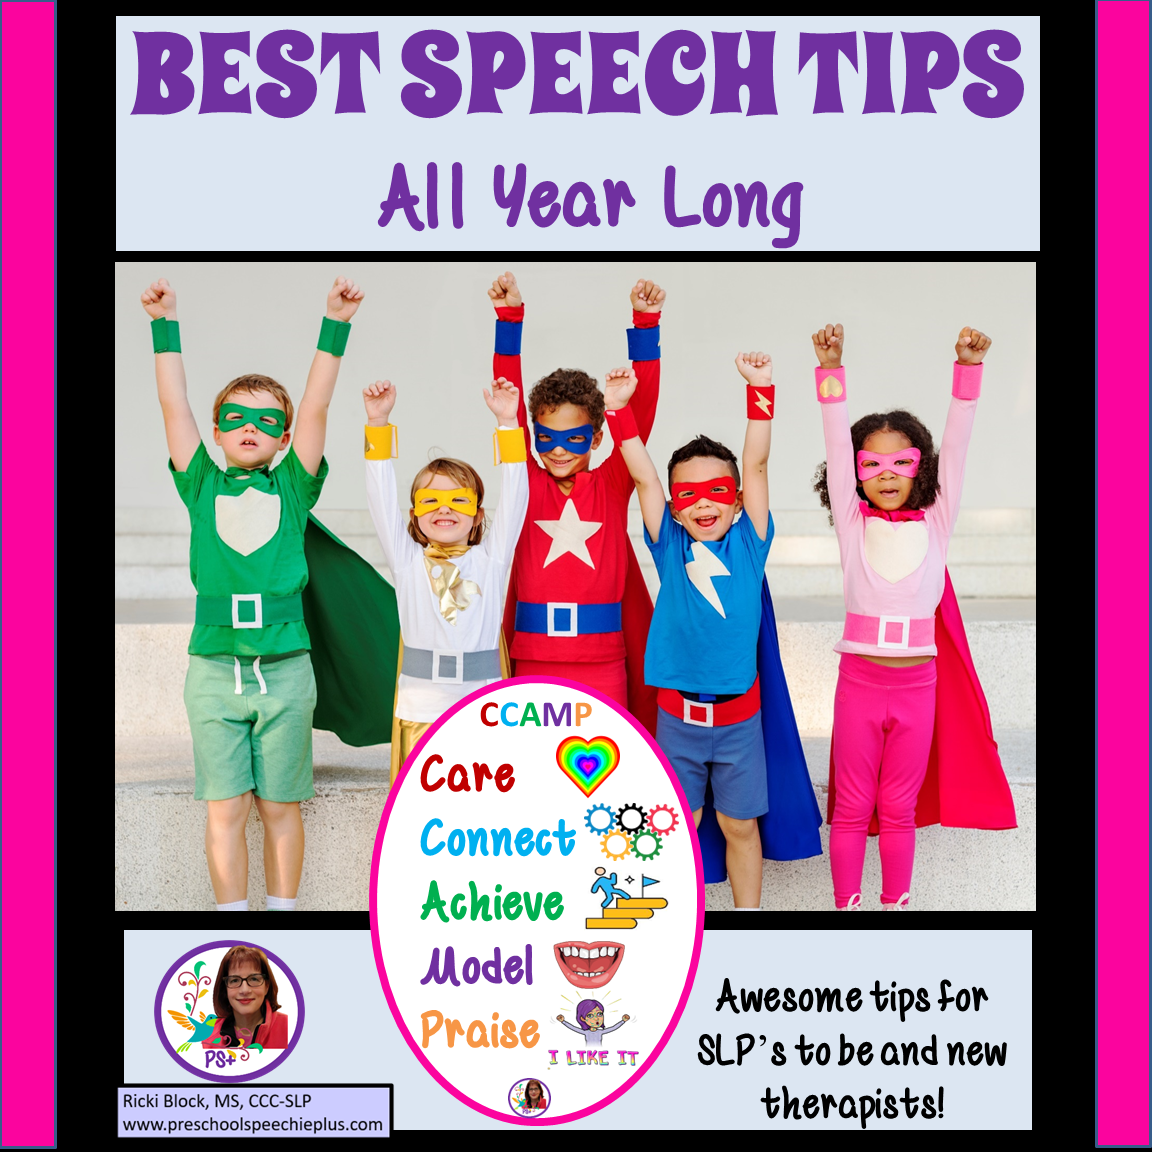 Best speech tips cover.png